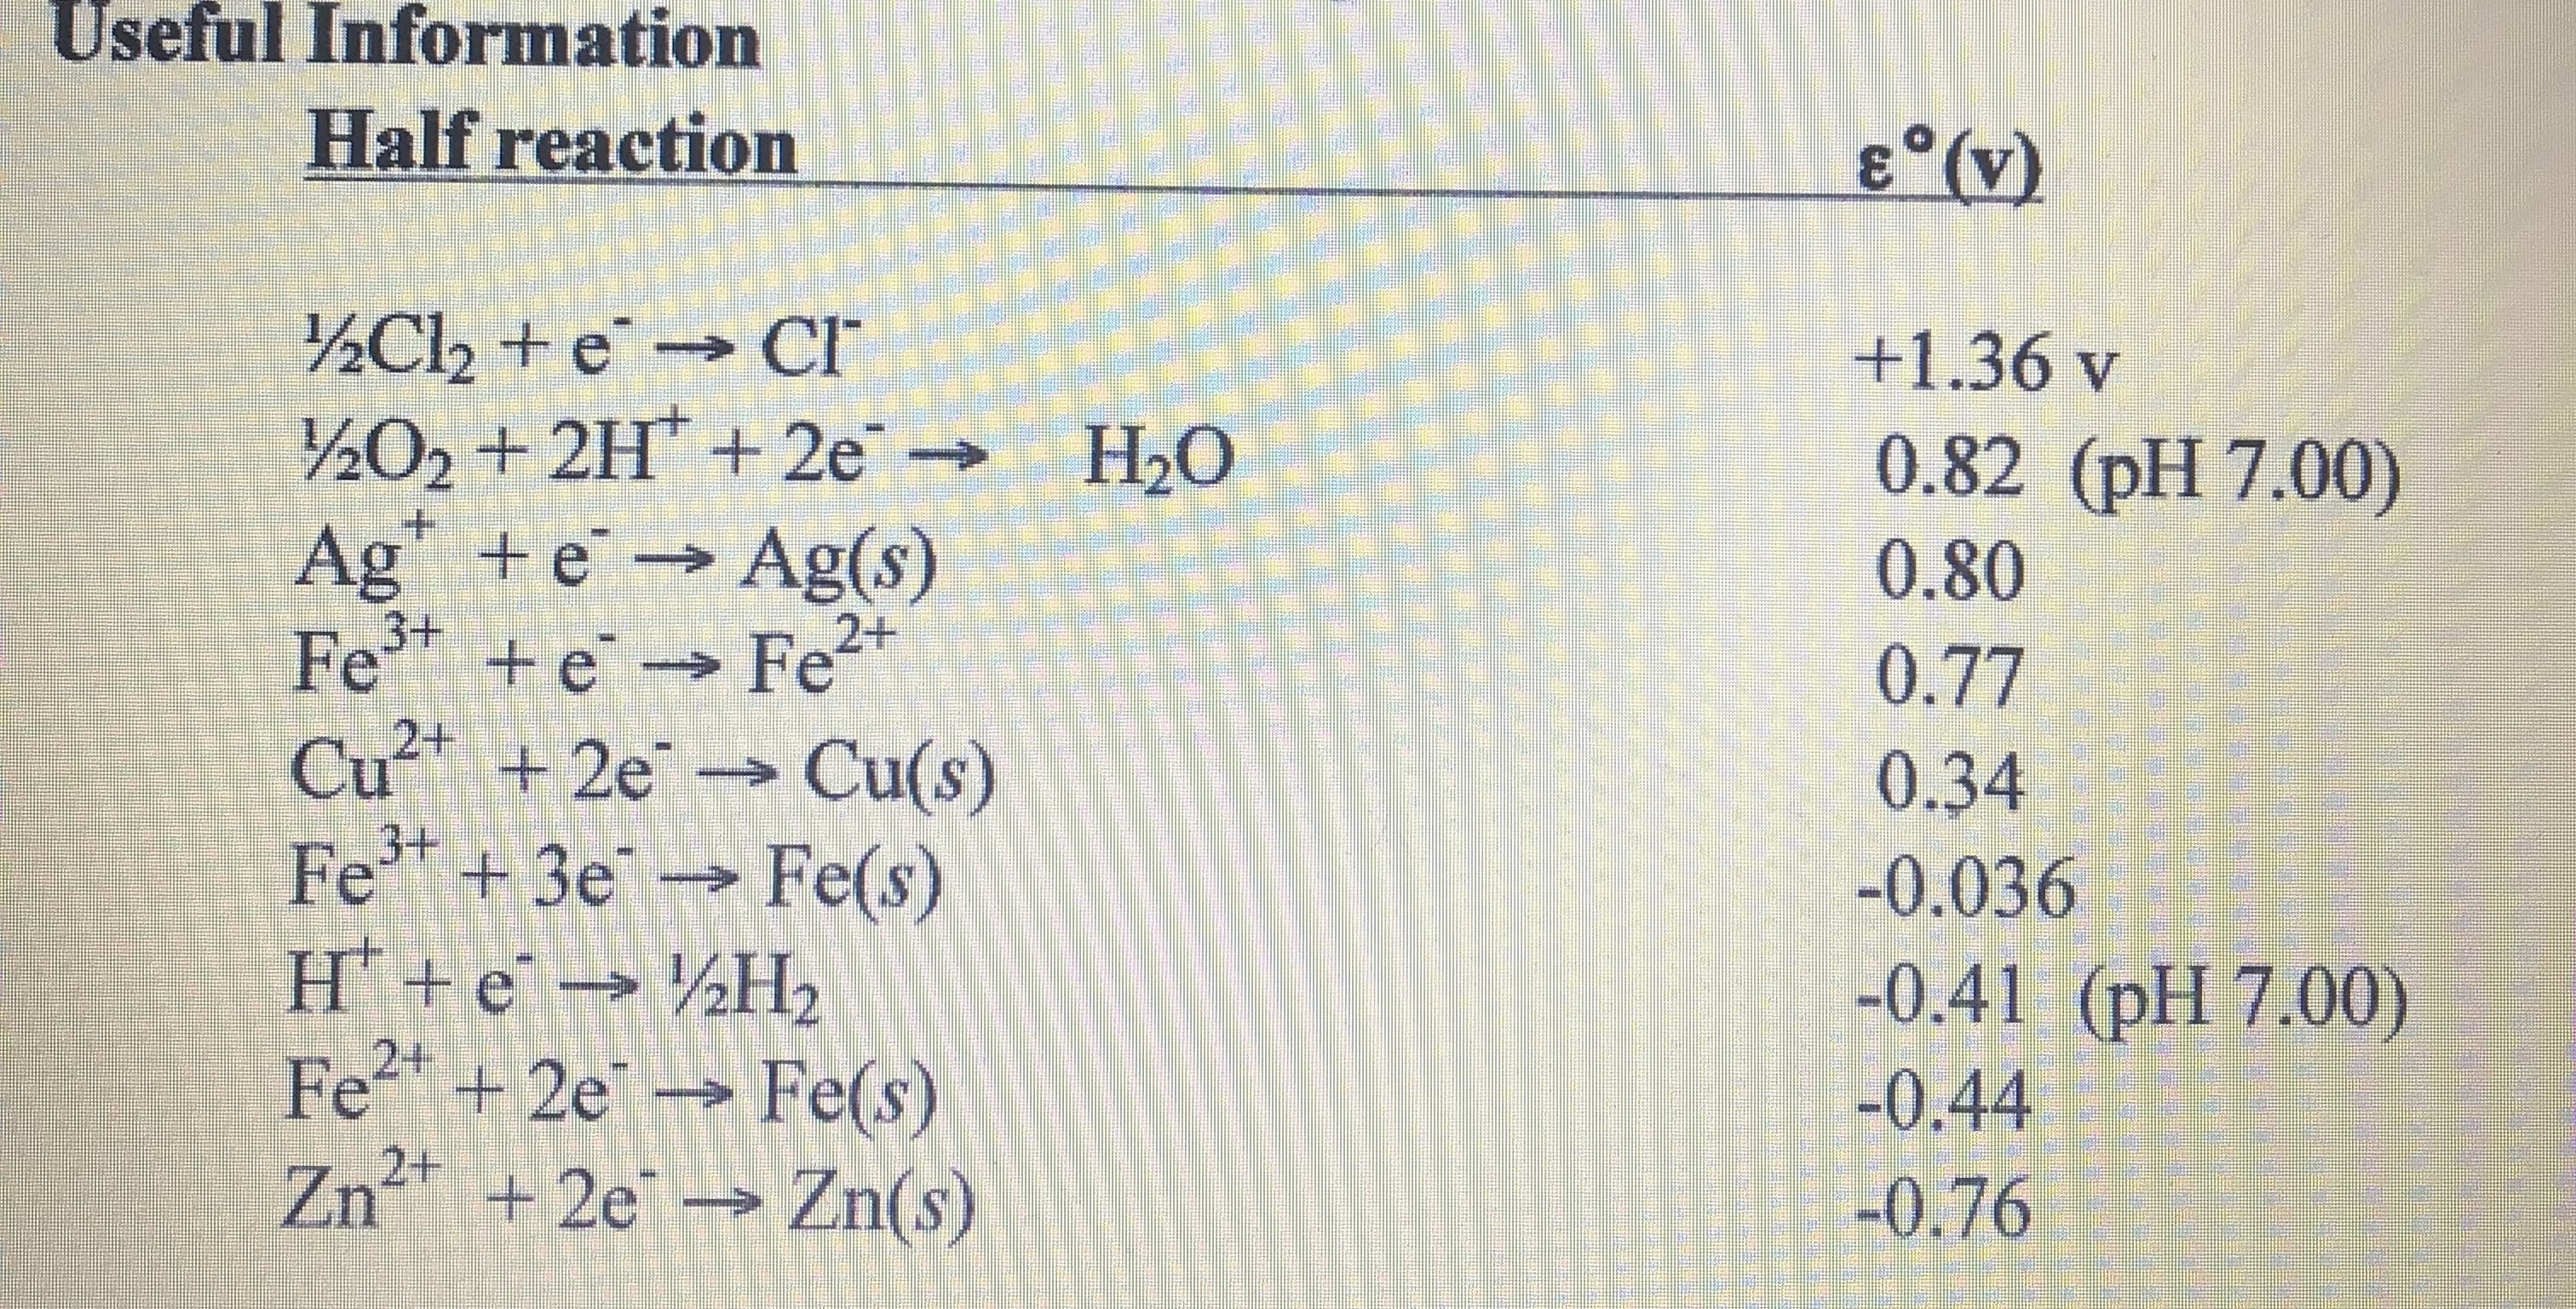 Useful
Information
Half reaction
E (v)
½Cl2 + e-→ Cl-
+1.36 v
0.82 (pH 7.00)
0.80
0.77
0.34
-0.036
-0.41 (pH 700)
0.44
0.76
Ag+ + e-→ Ag(s)
Fe te- Fe
Cut +2e Cu(s)
Fet +3e Fe(s)
Zn2 +2e Zn(s)
